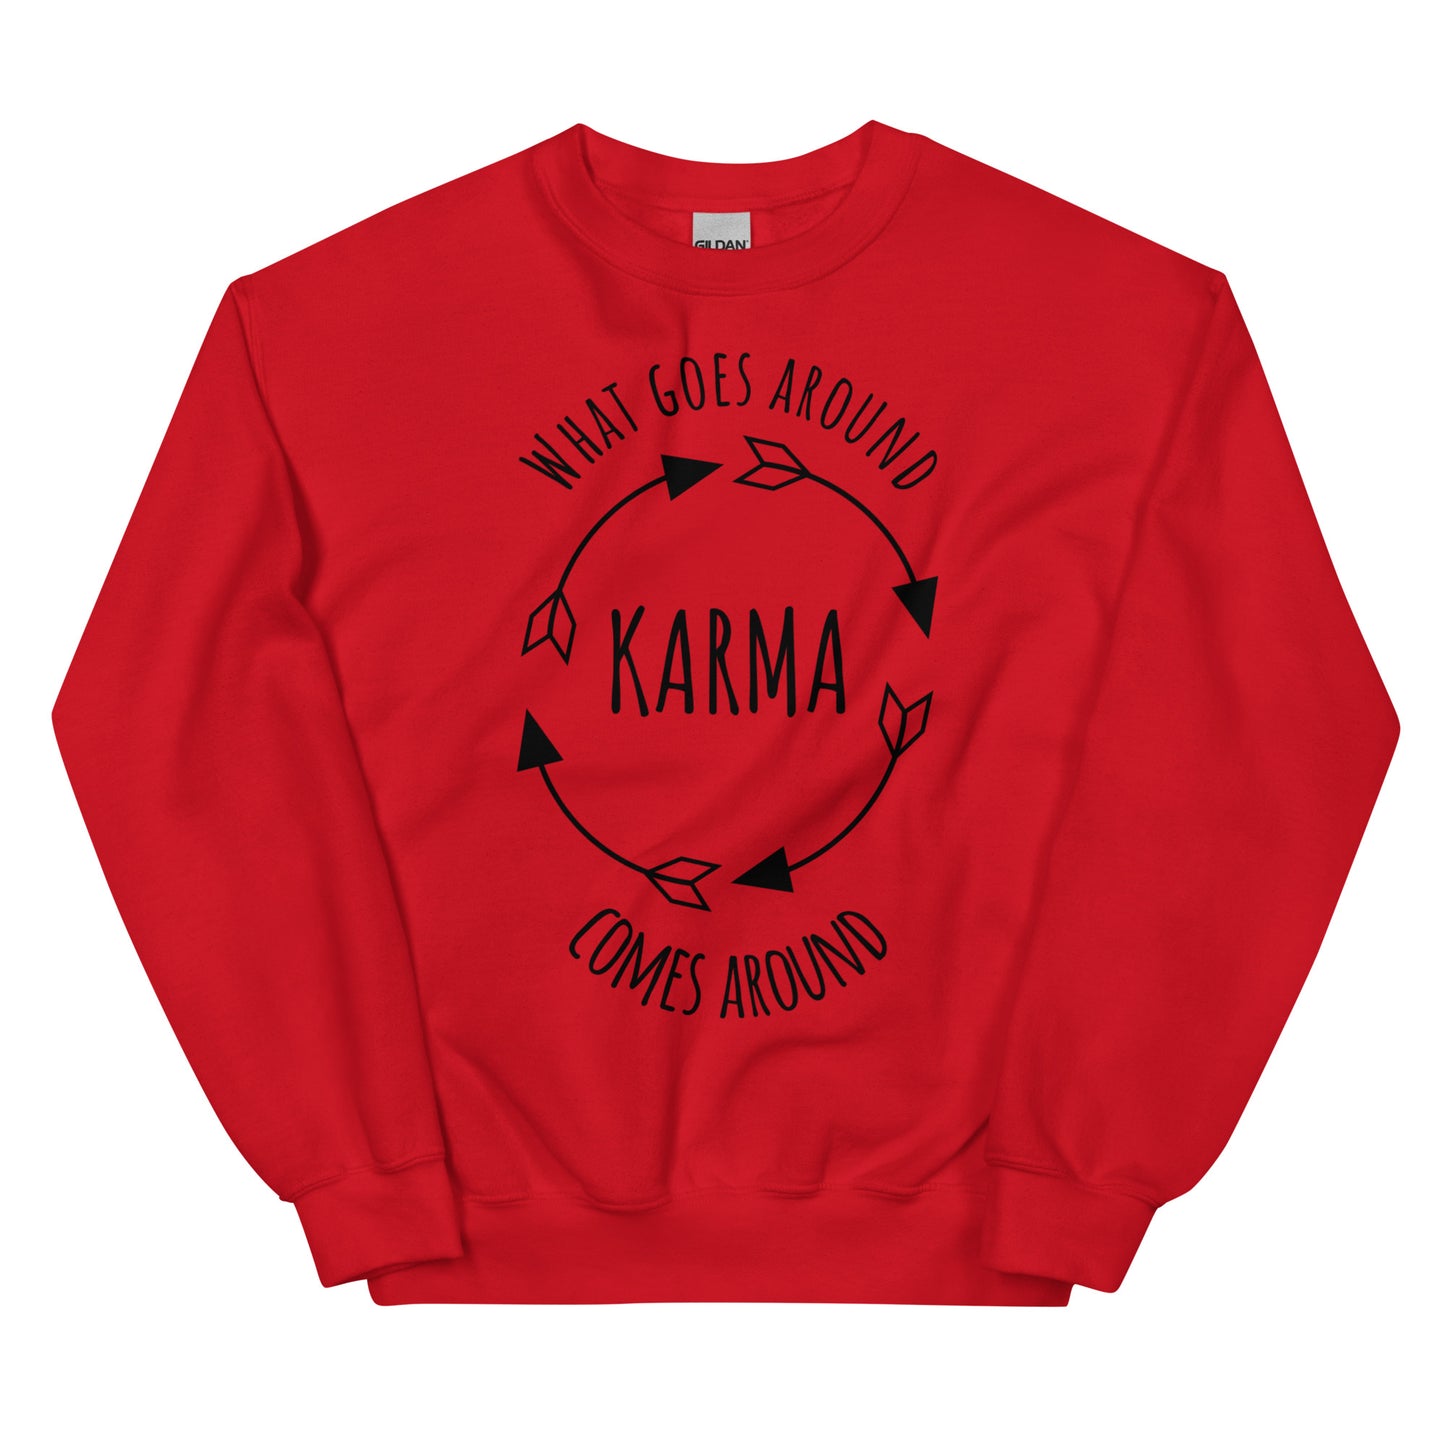 KARMA - what goes around comes around Unisex Crew Neck Sweatshirt (black lettering)